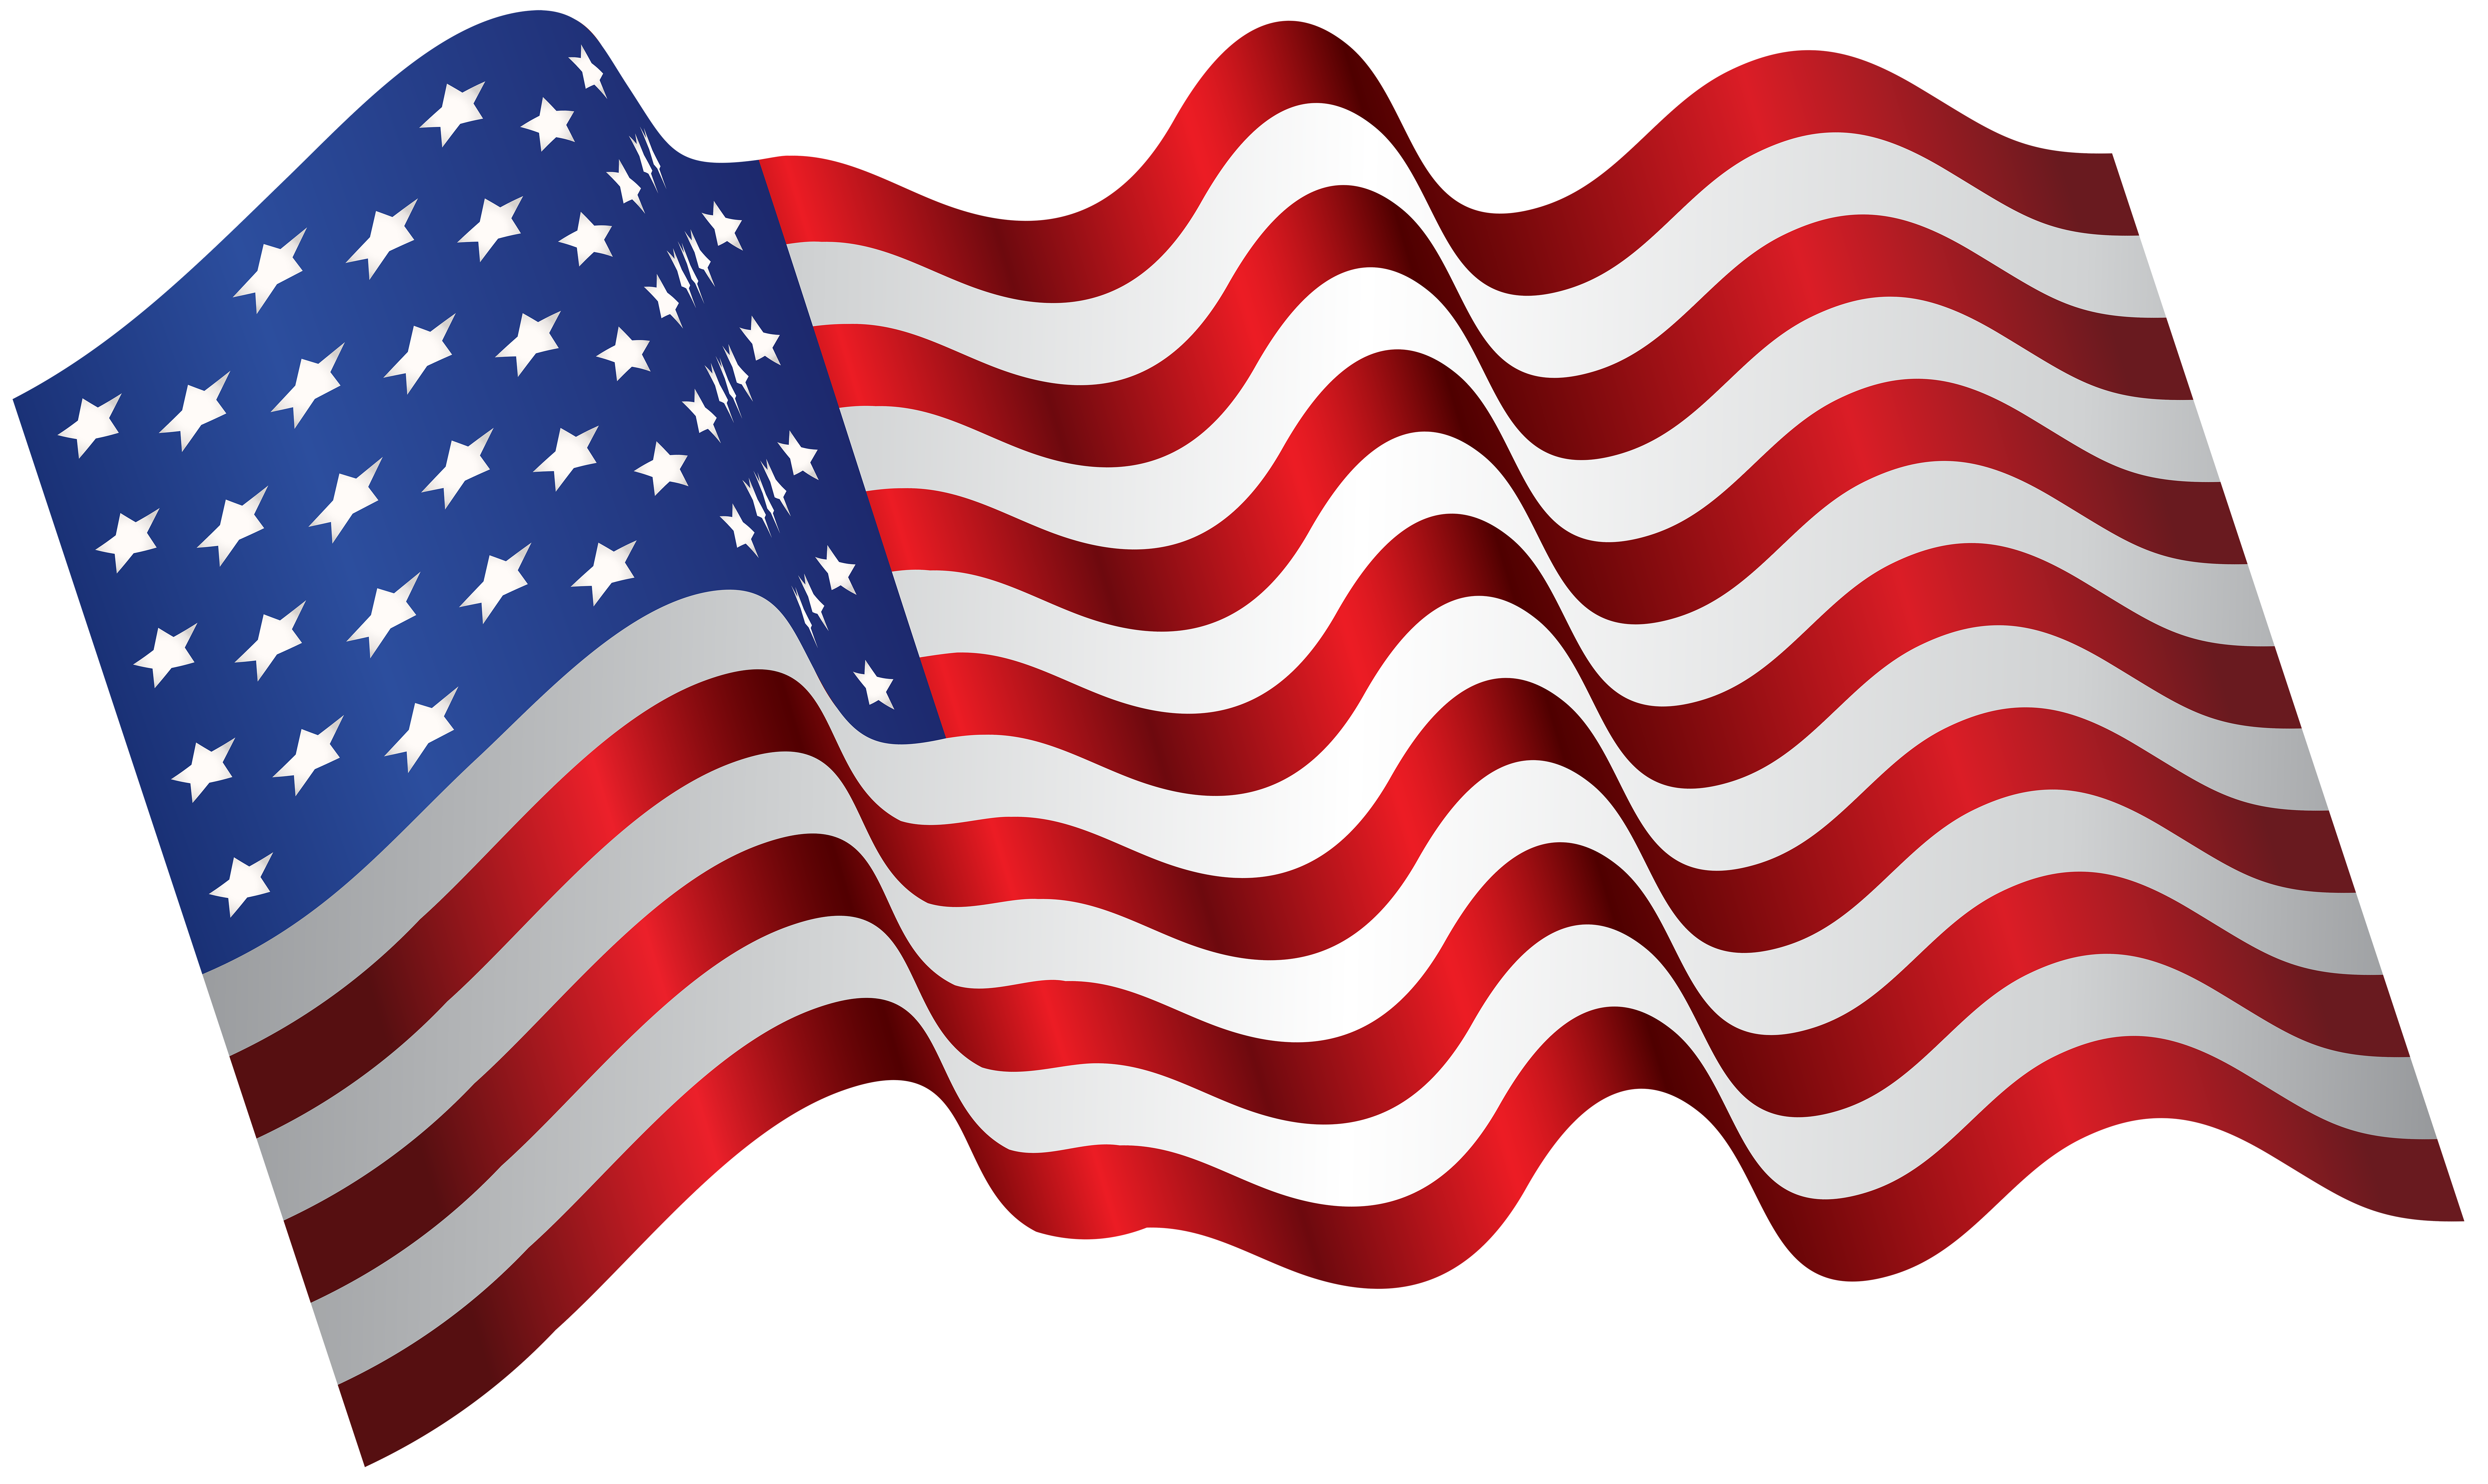 USA America Waving Flag PNG Clip Art Image.